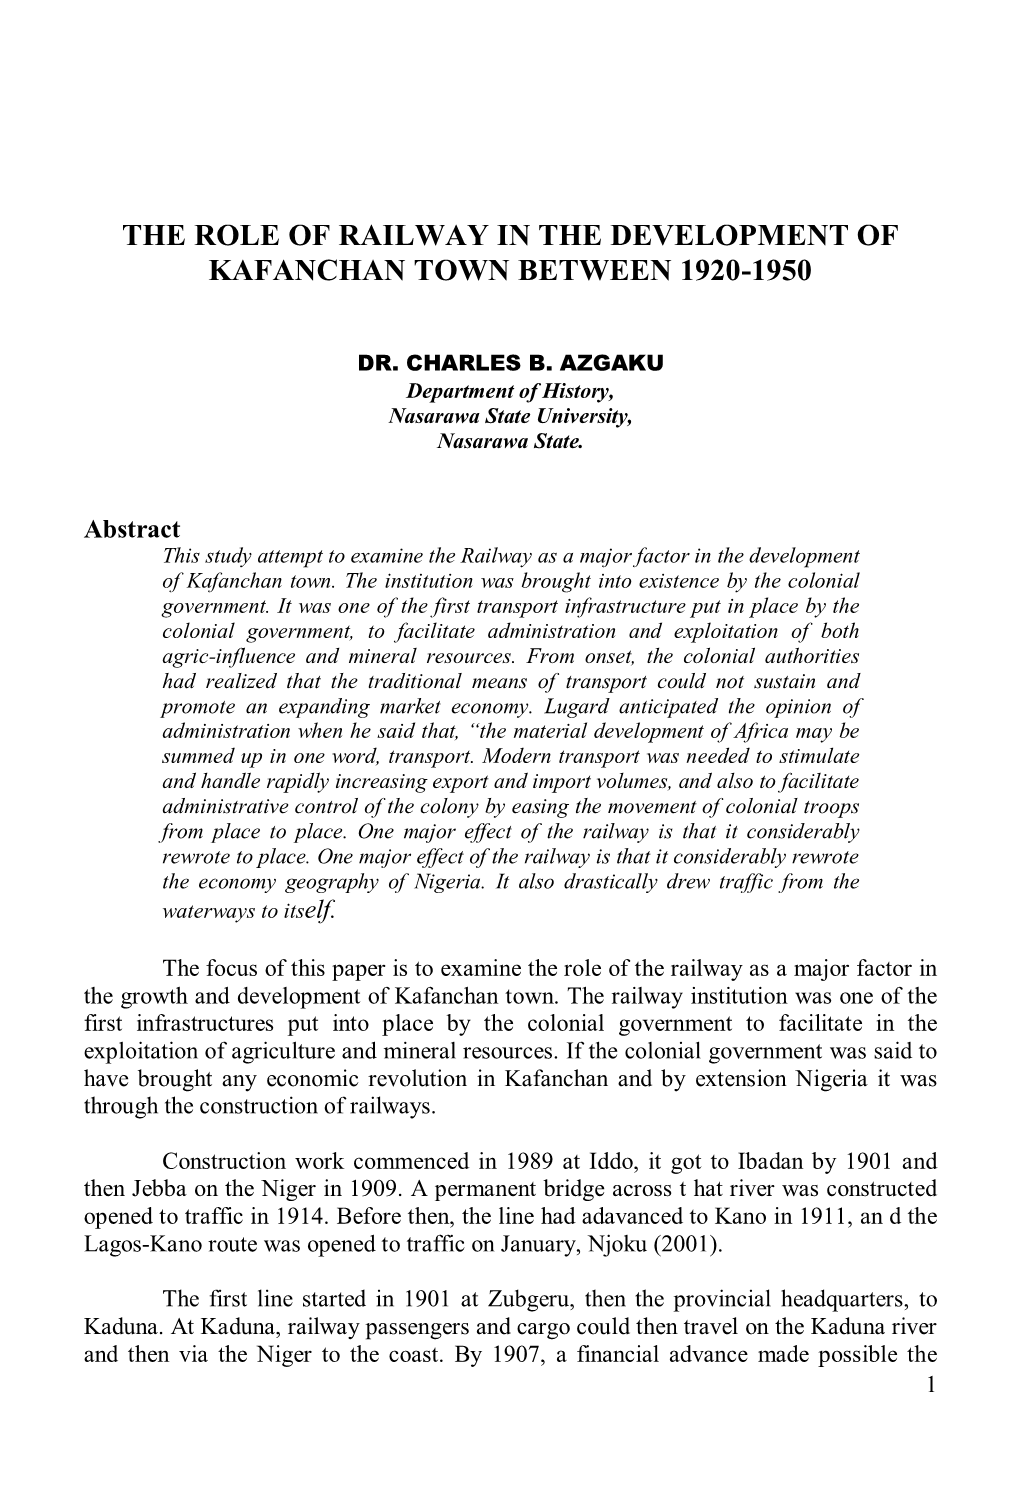 The Role of Railway in the Development of Kafanchan Town Between 1920-1950